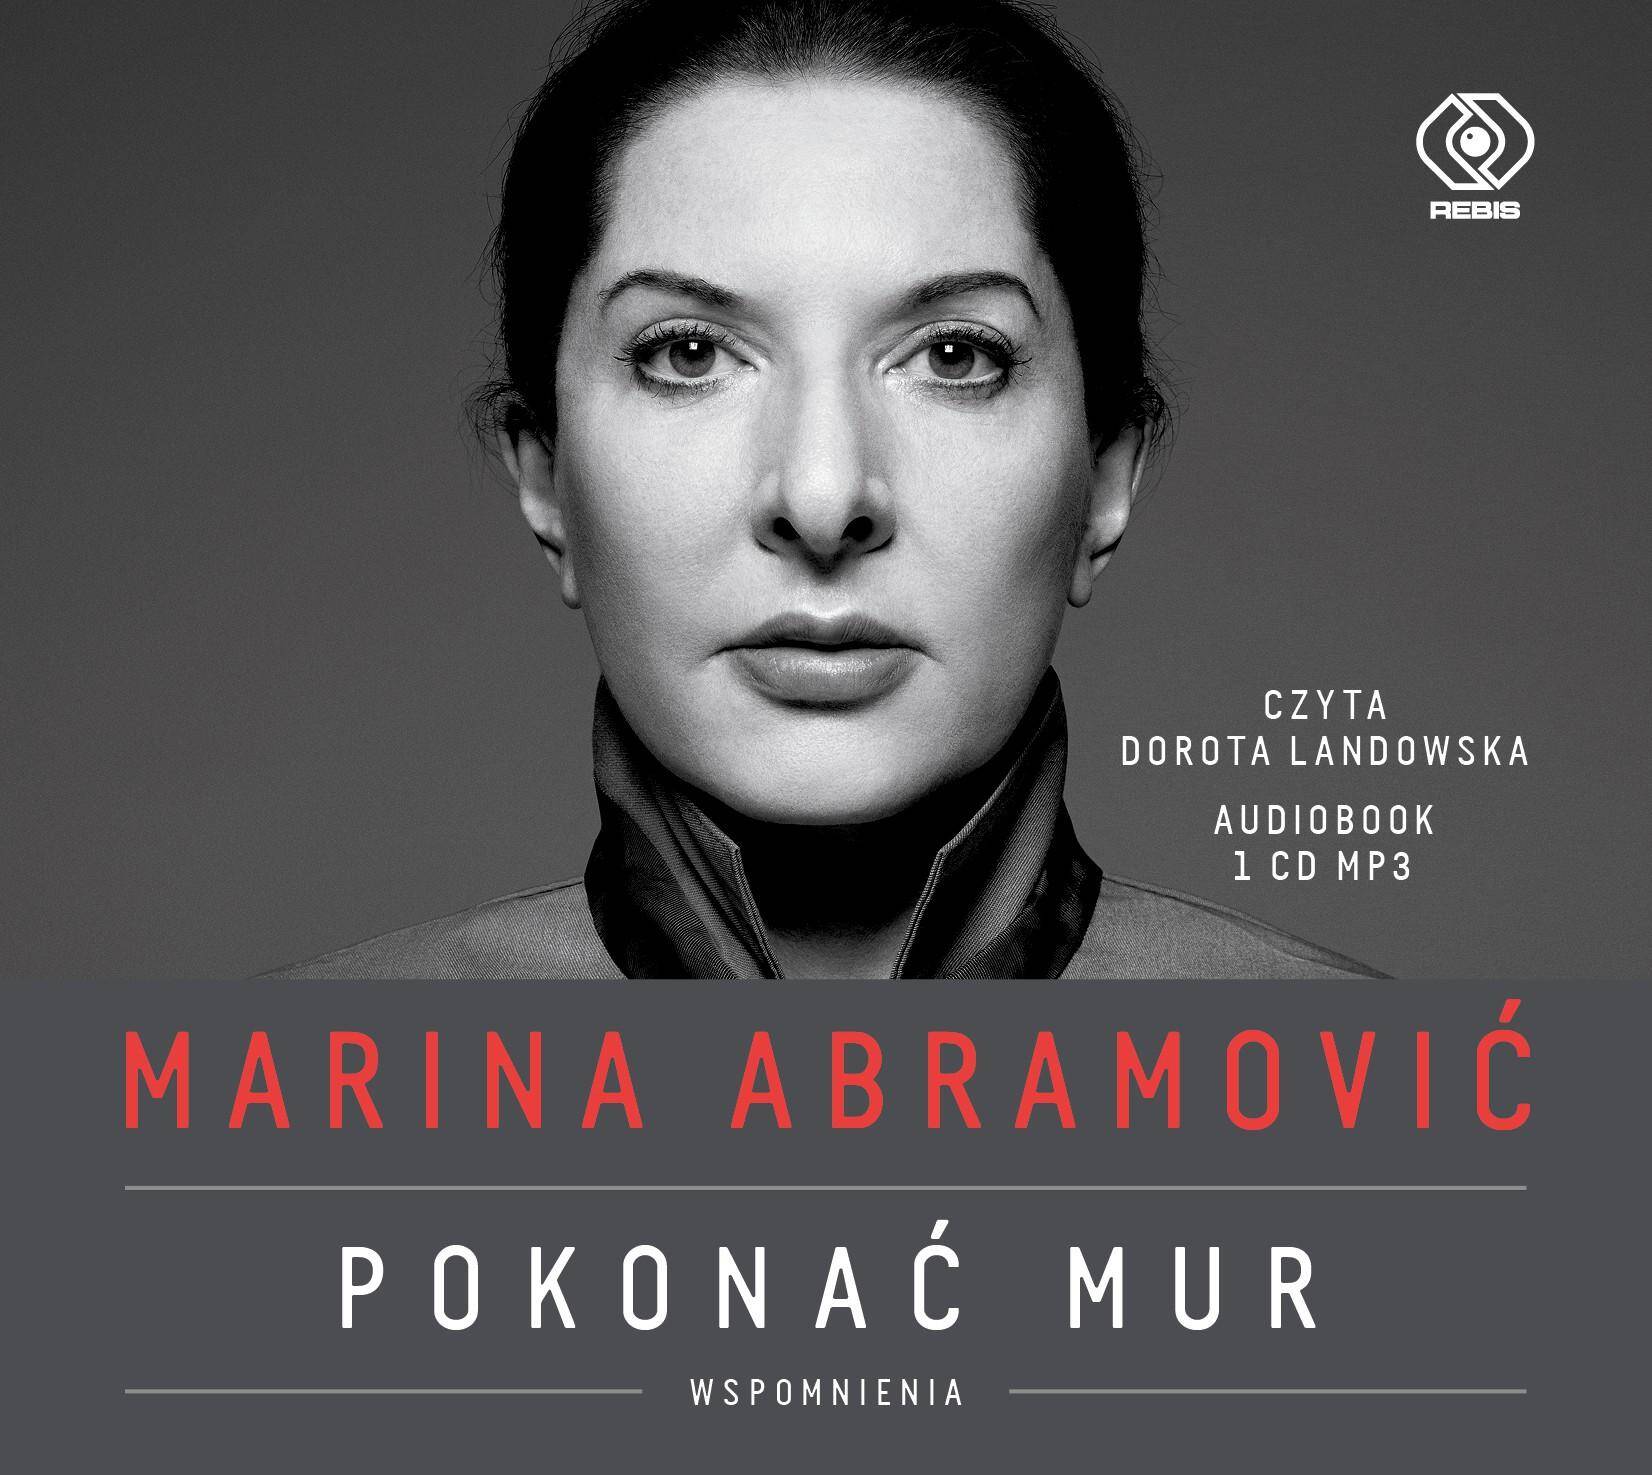 CD MP3 Marina abramović pokonać mur wspomnienia